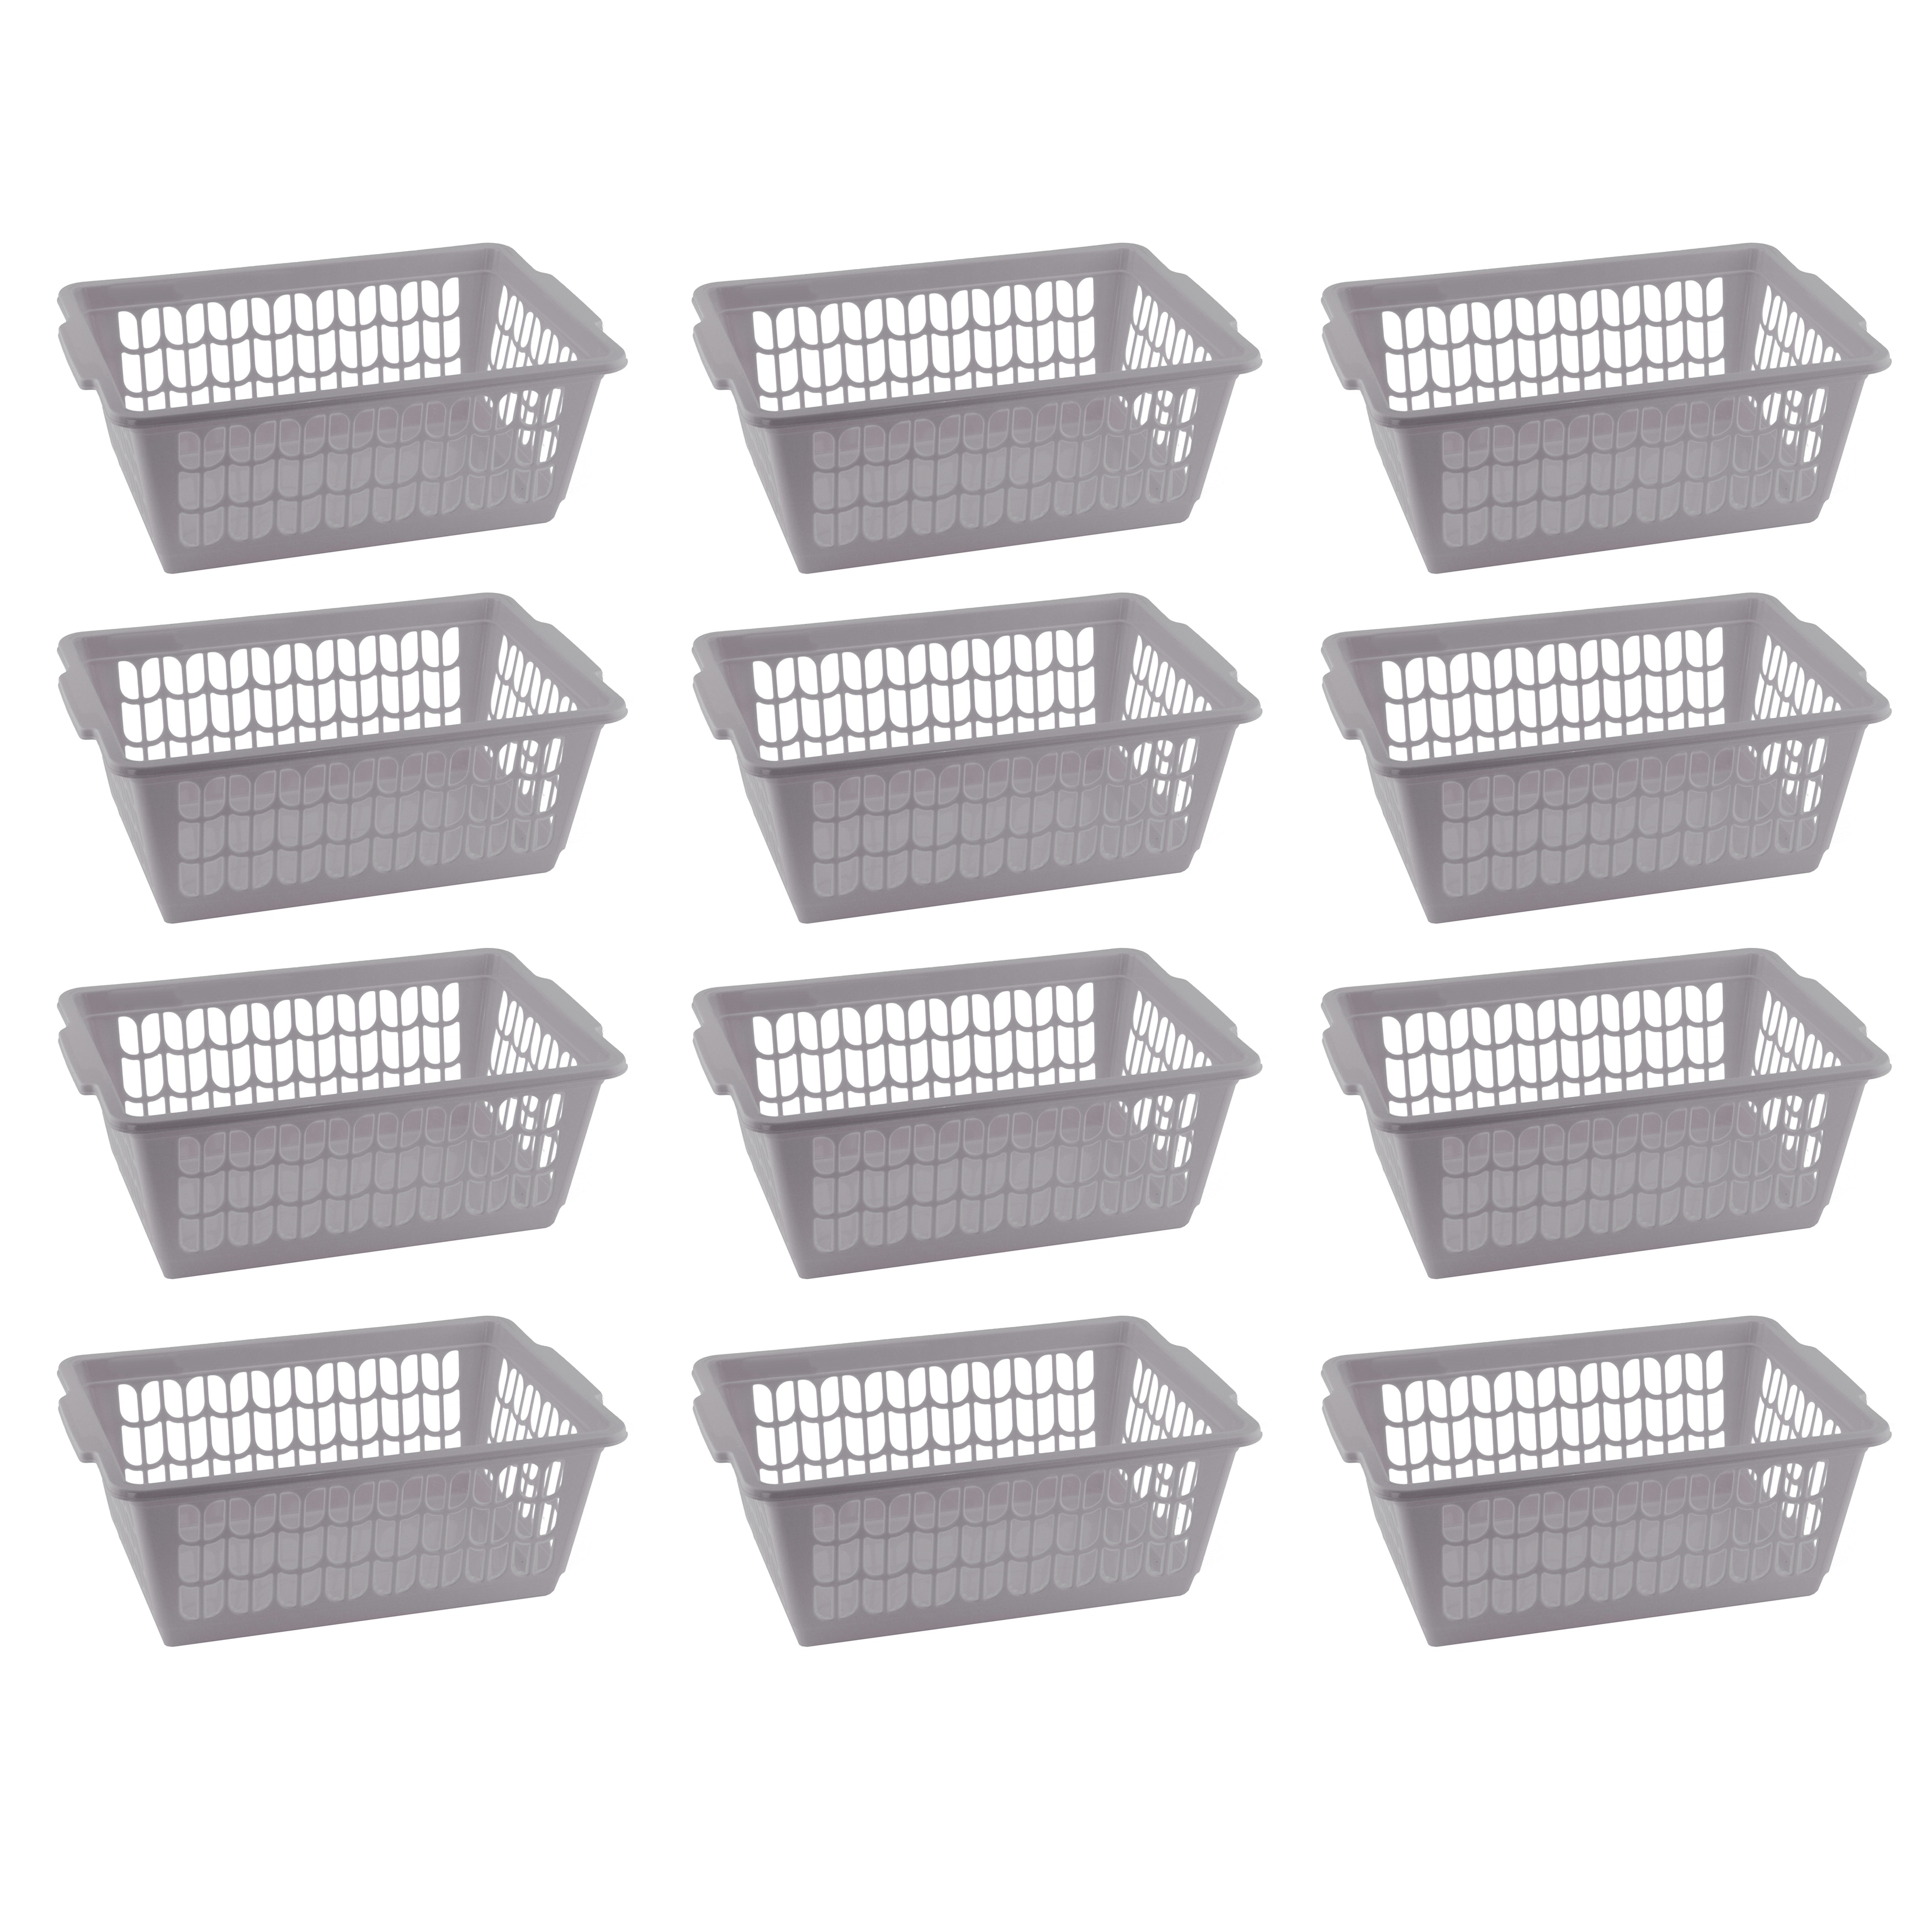 Small Plastic Storage Basket 11.5 x 7.75 x 4.25 Inch - Bedroom